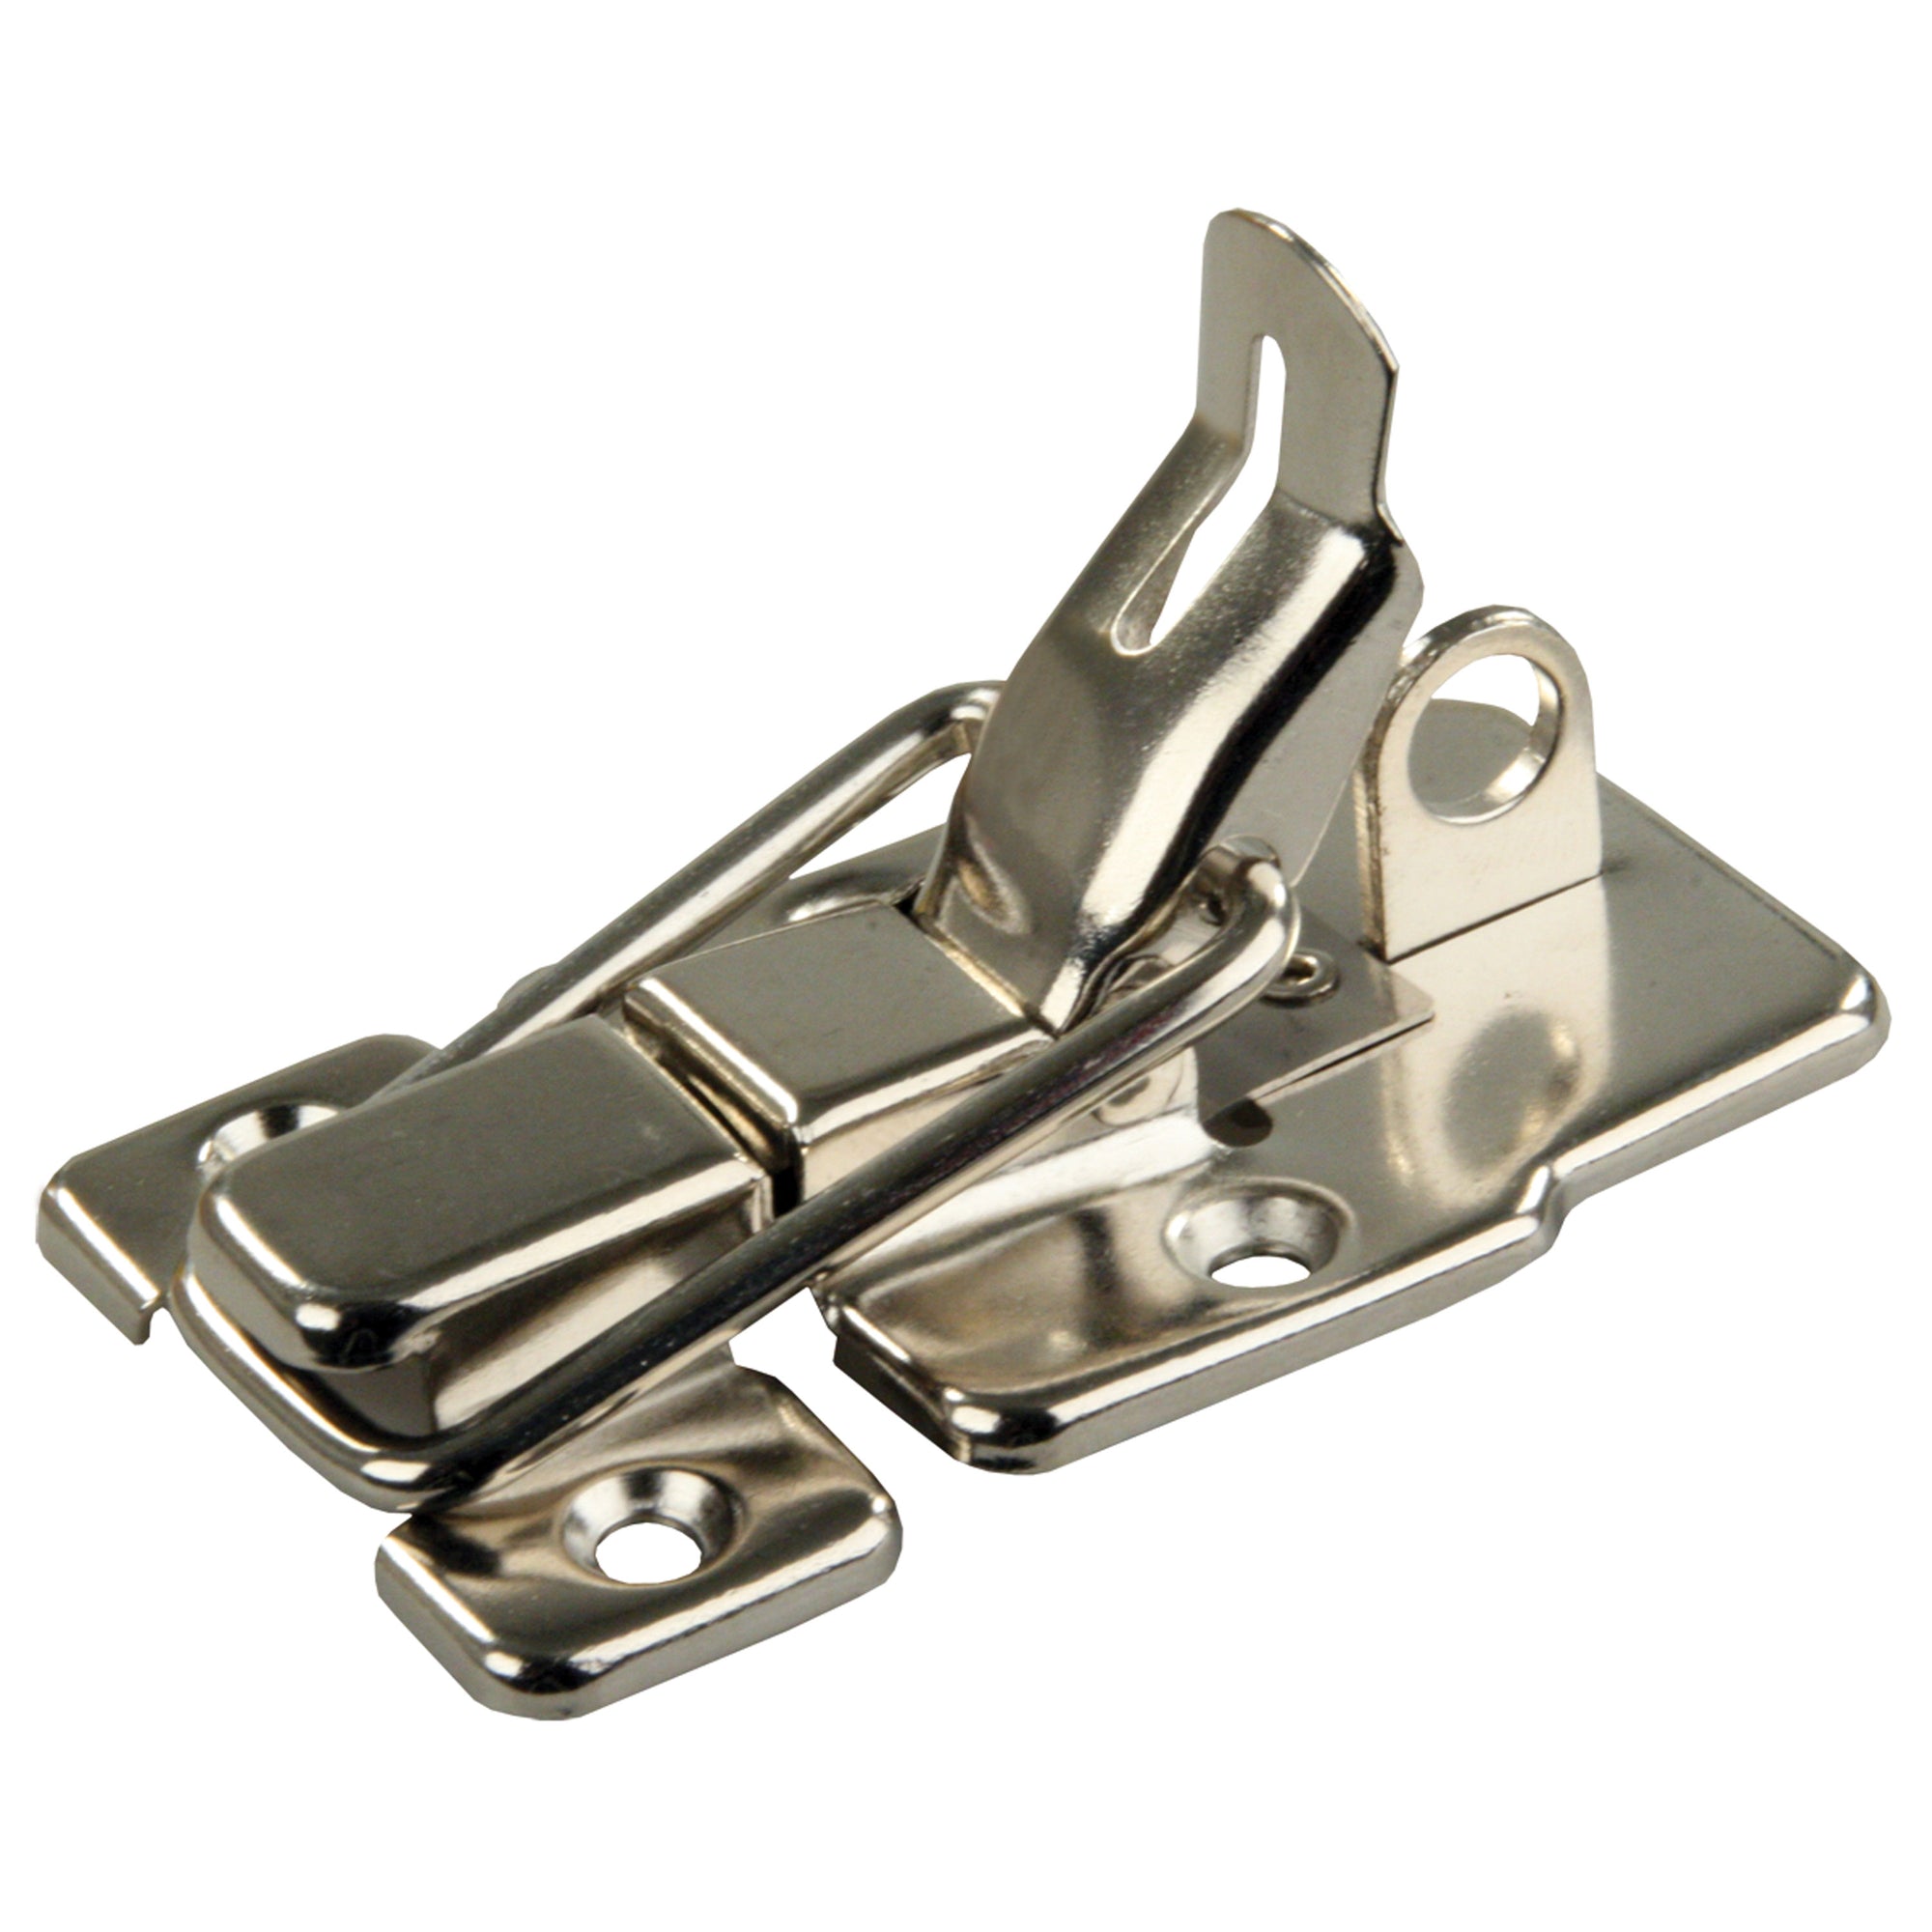 JR Products 11735 Lockable Draw Pull Latch